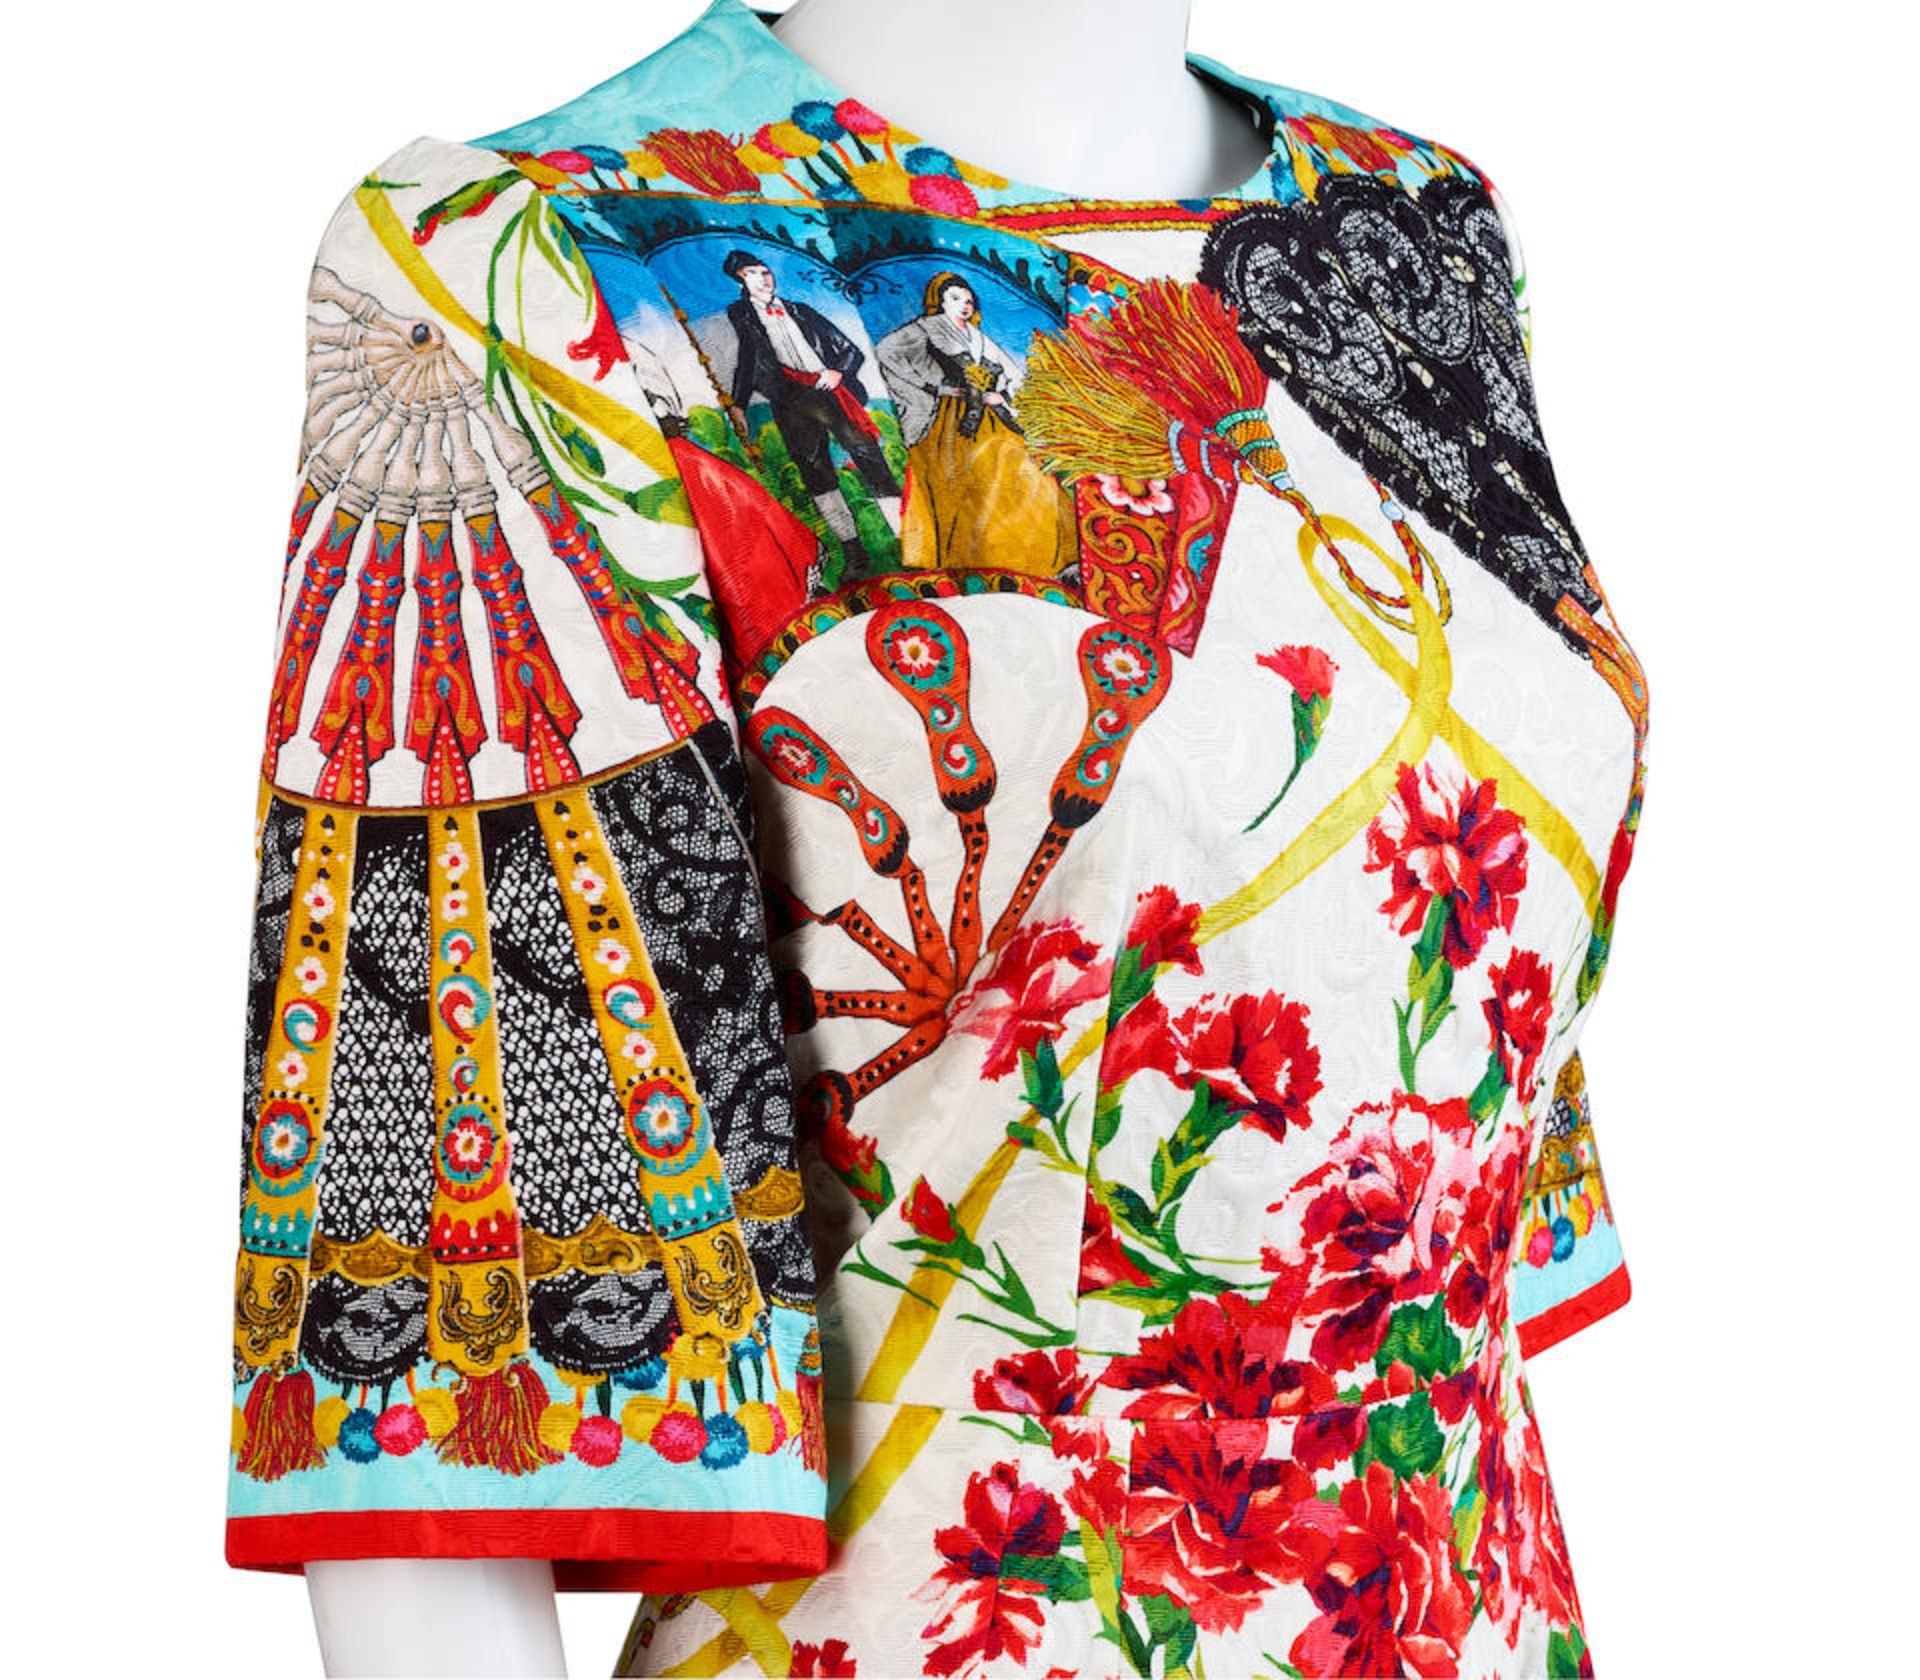 DOLCE & GABBANA: FAN BROCADE FLORAL DRESS - Image 2 of 2